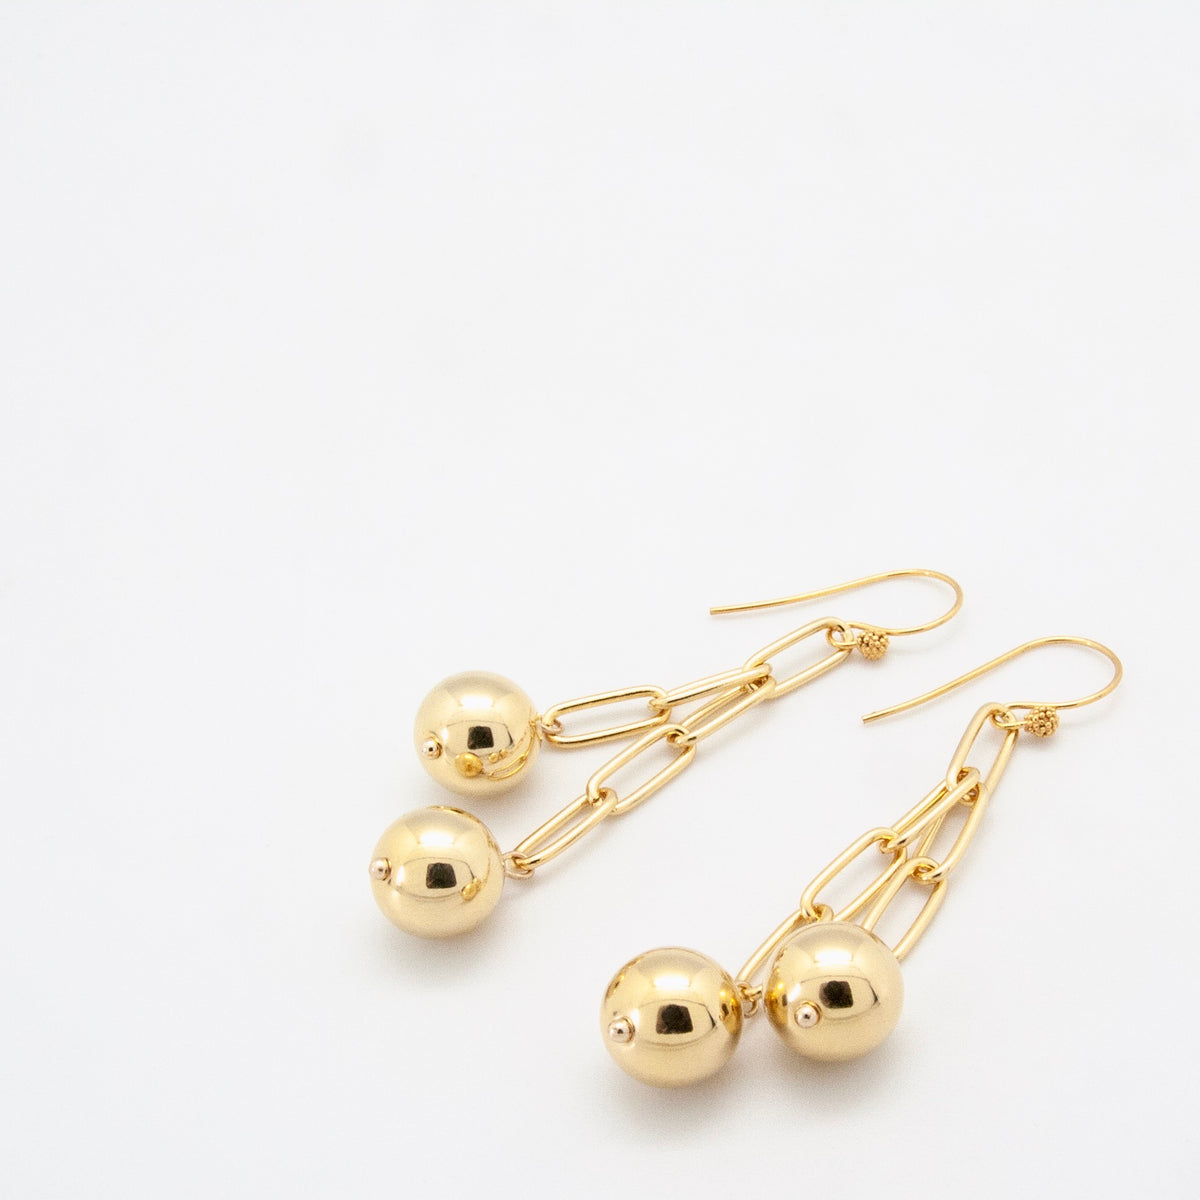 ball + chain earrings